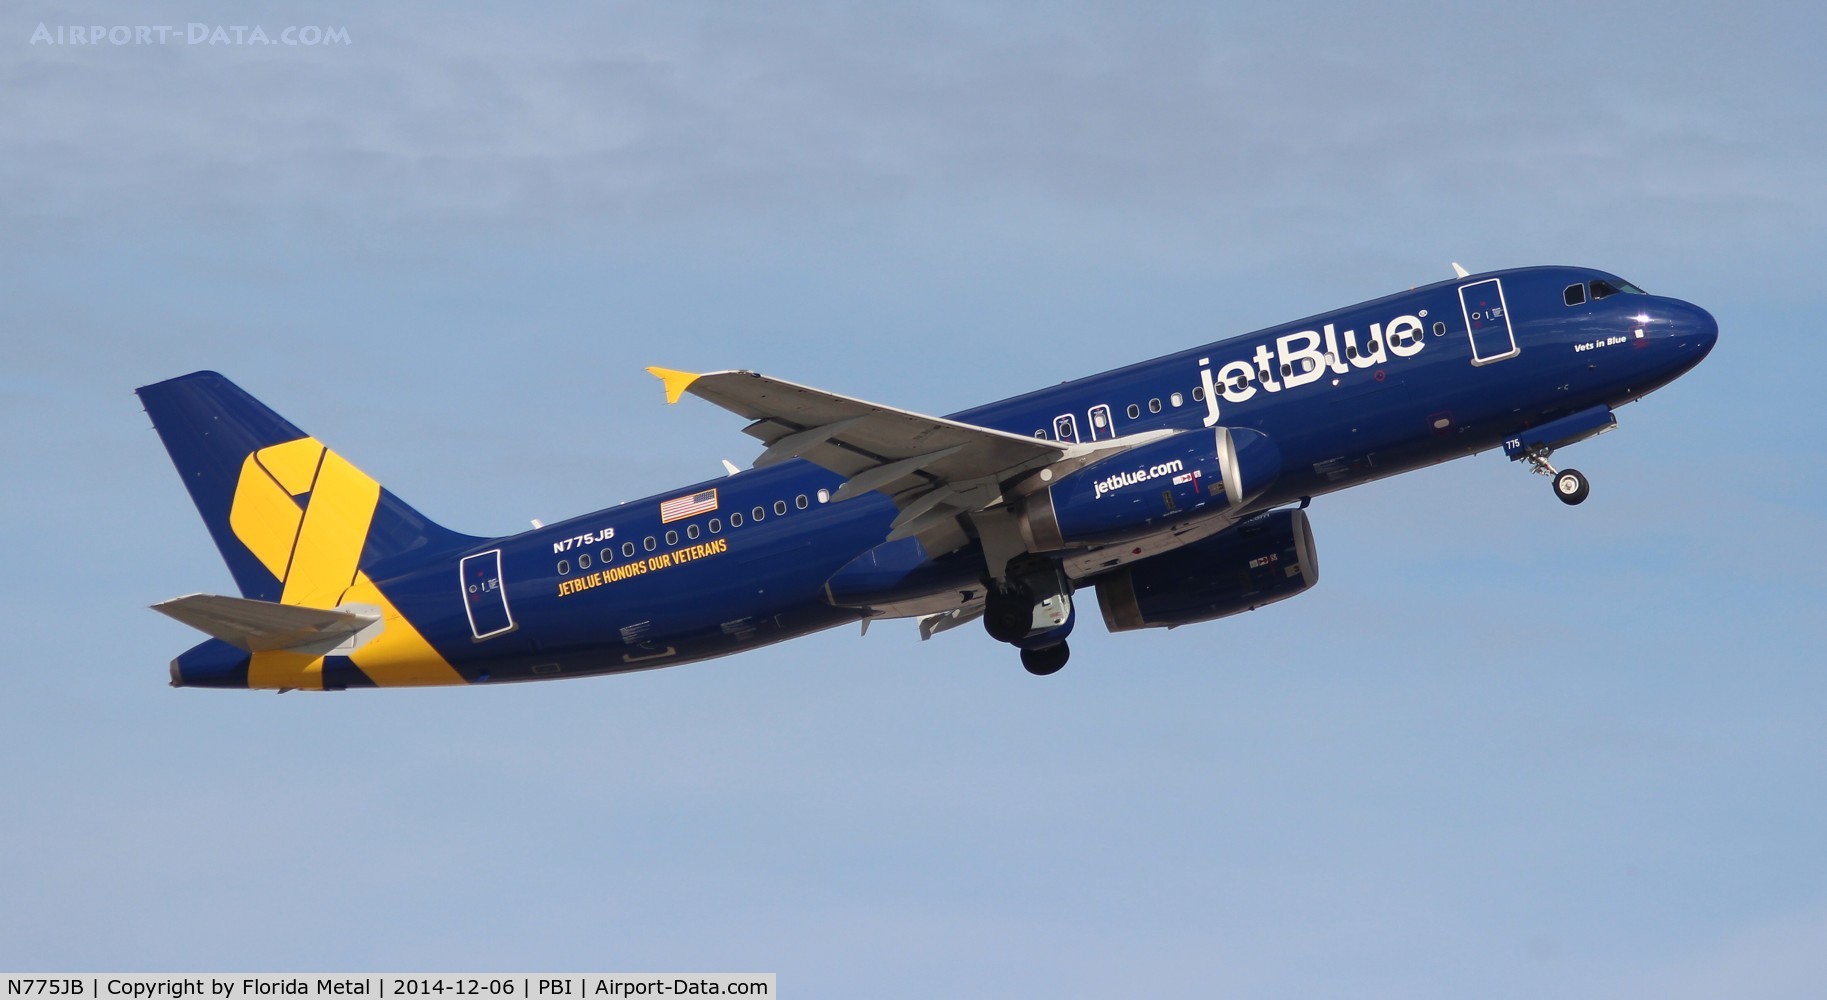 N775JB, 2009 Airbus A320-232 C/N 3800, Jet Blue Veterans plane